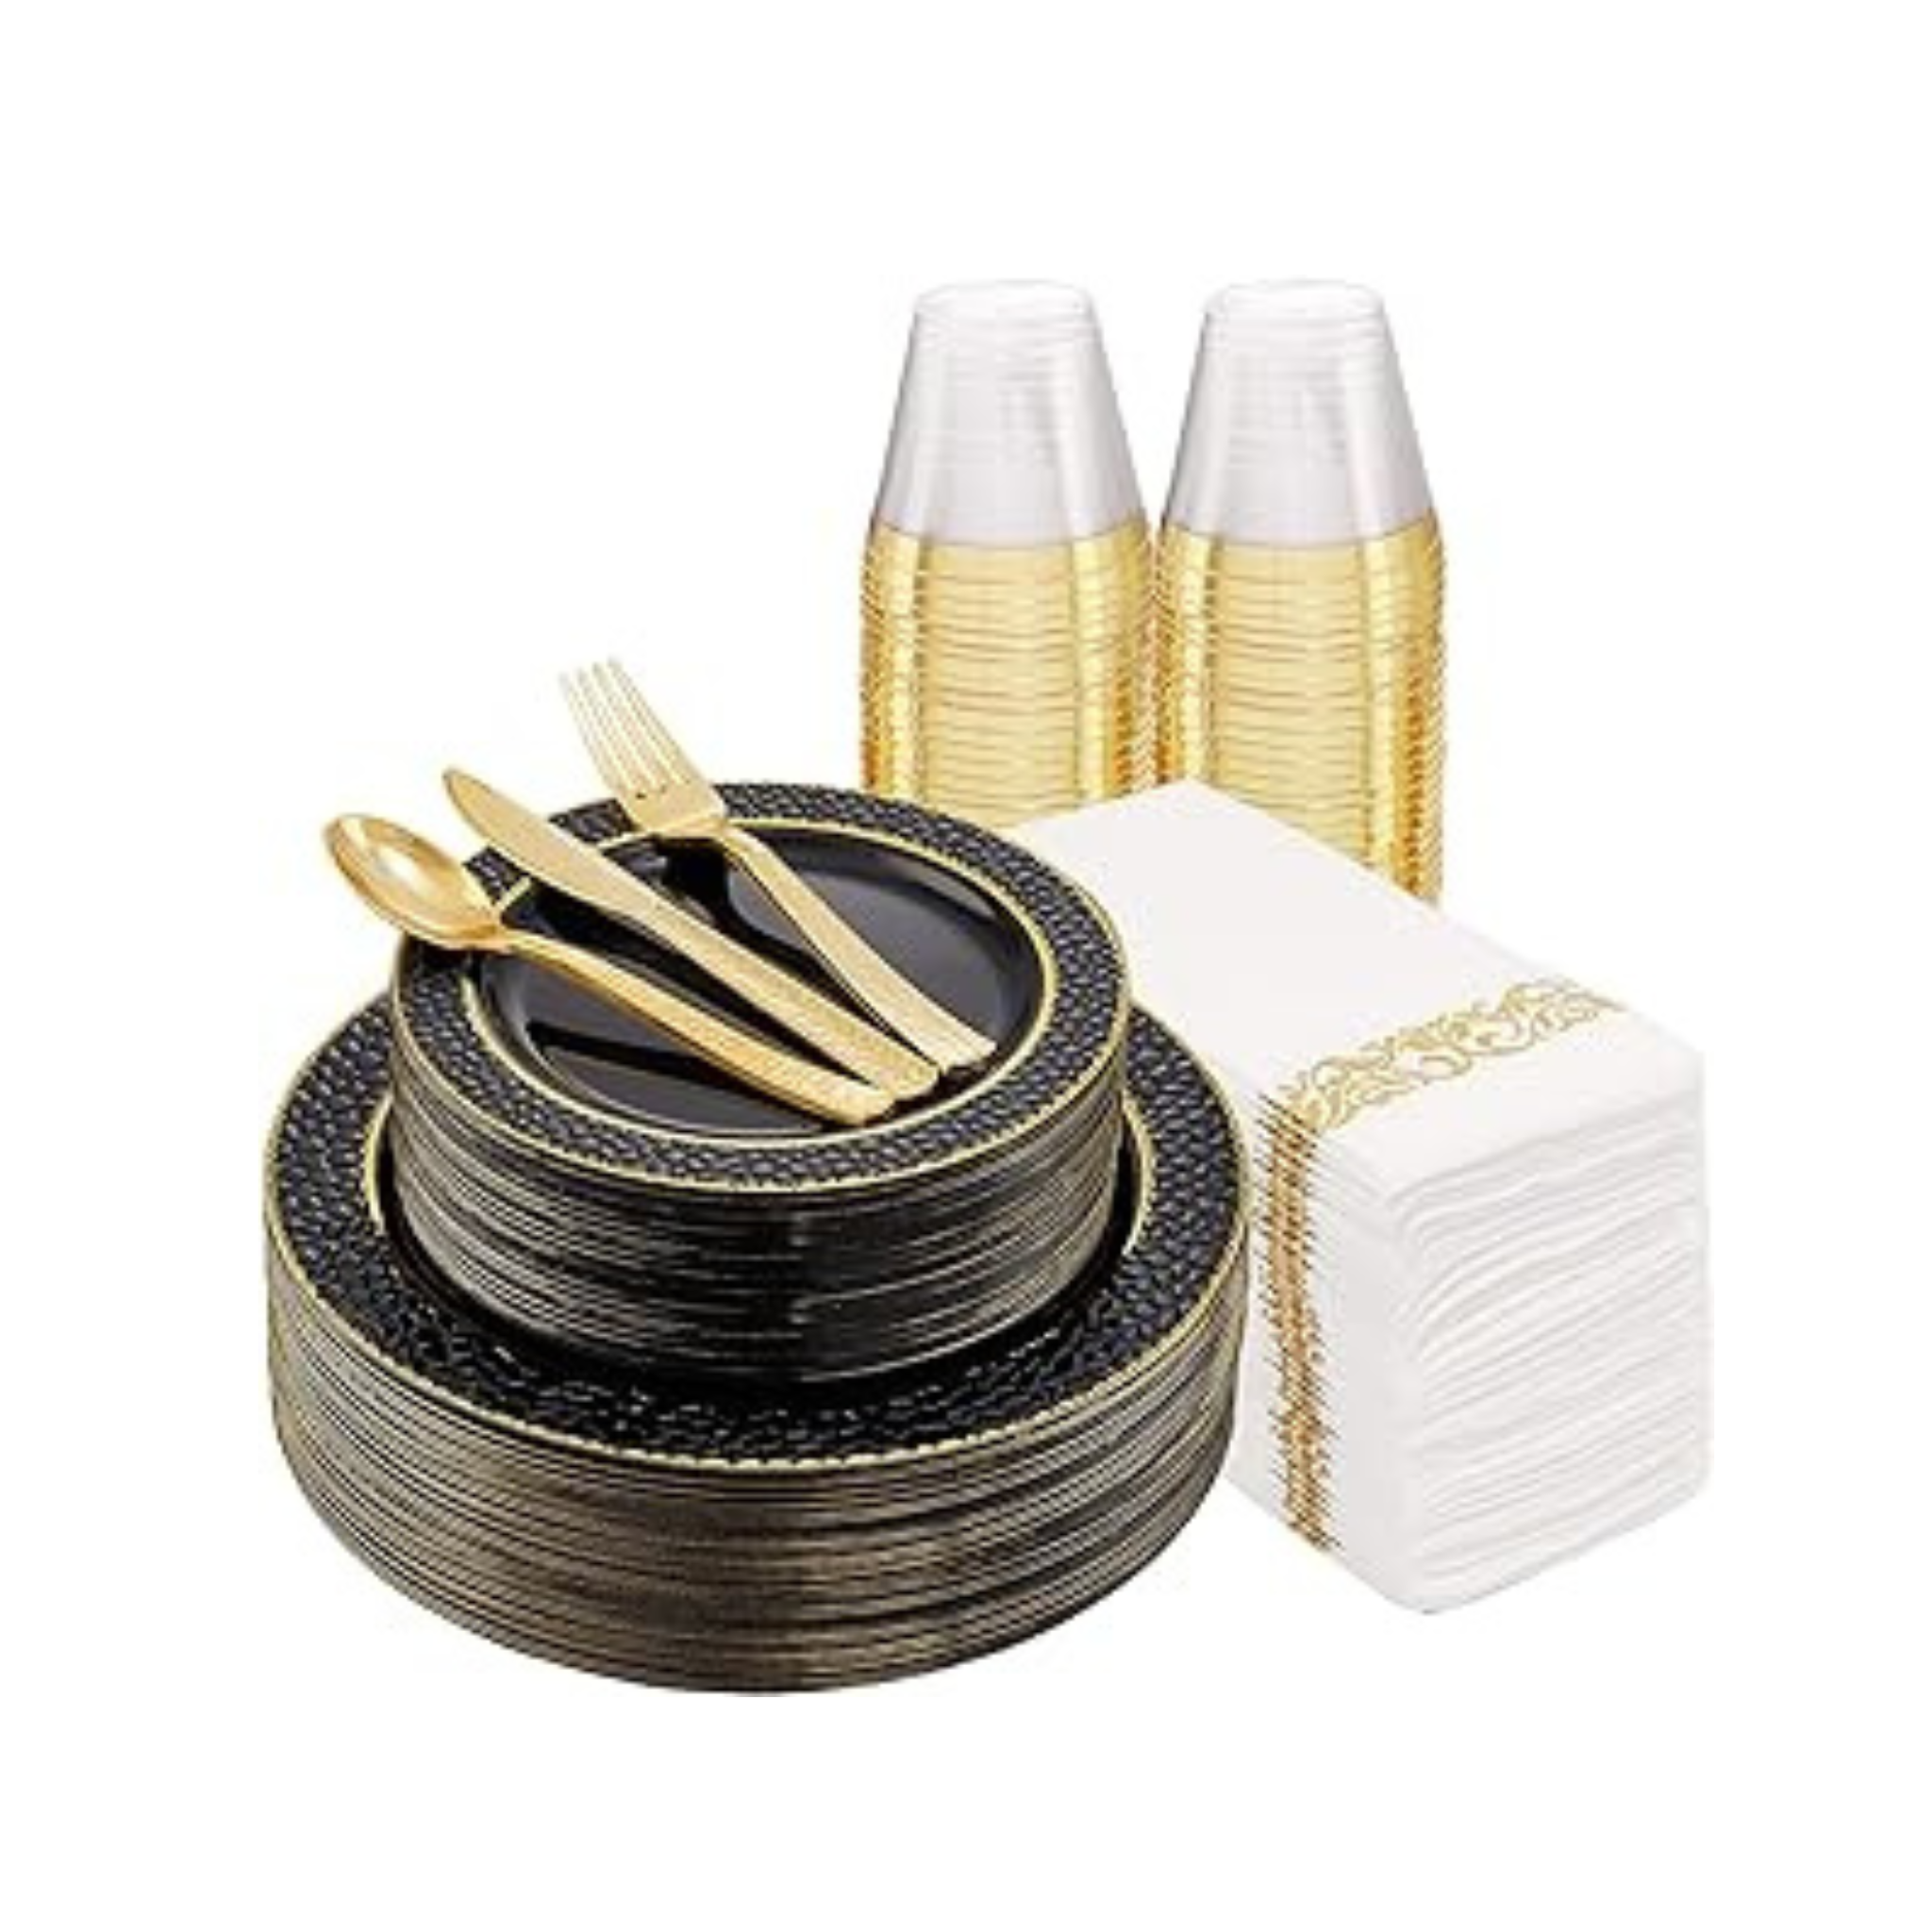 175 Piece Set Of Gold Rim & Black Disposable Dinnerware Set